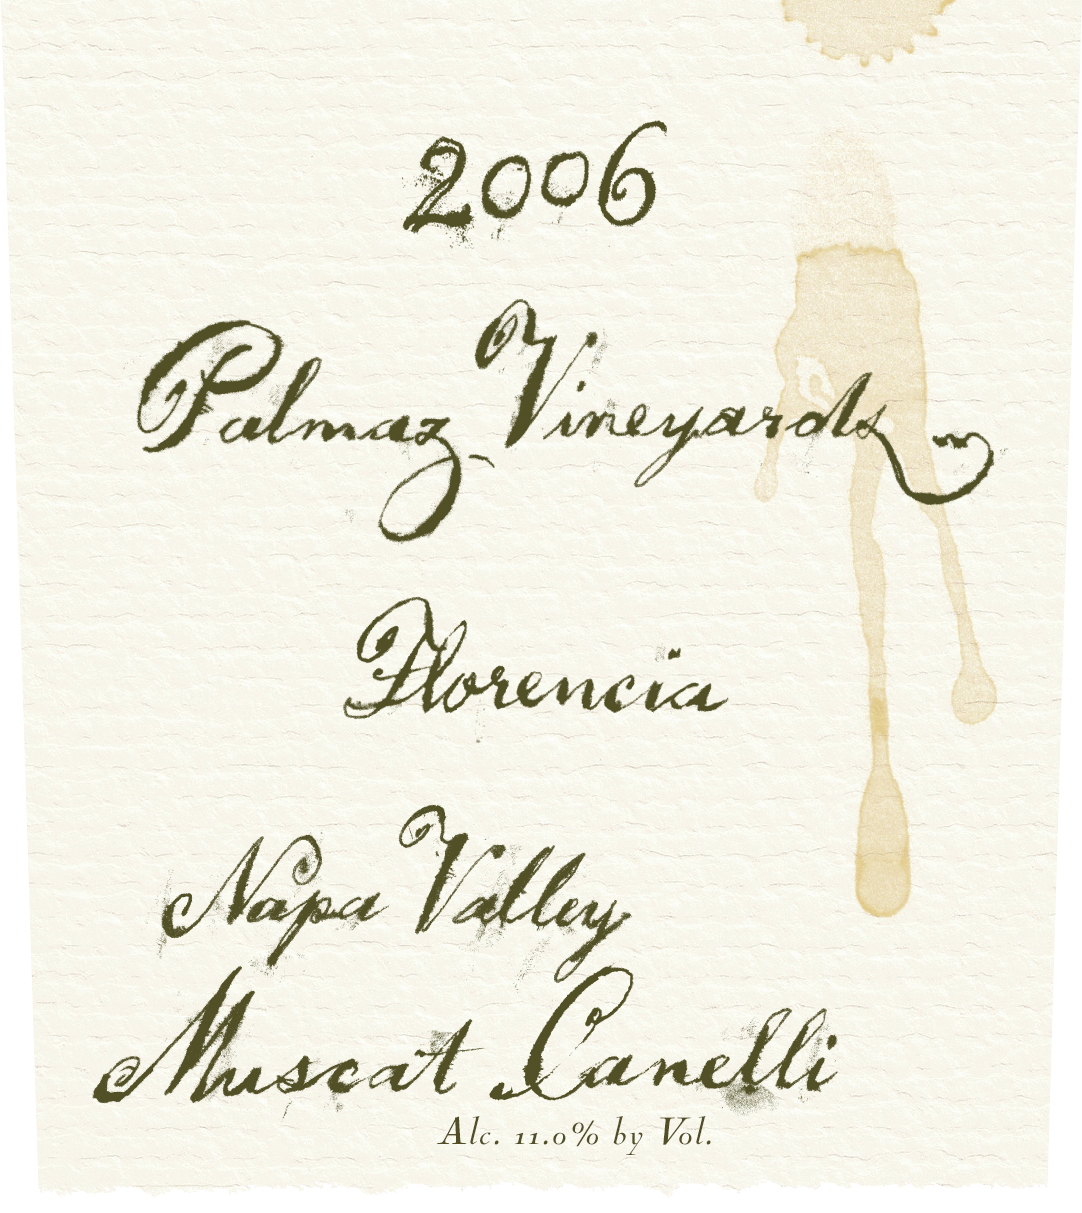 2006 Label